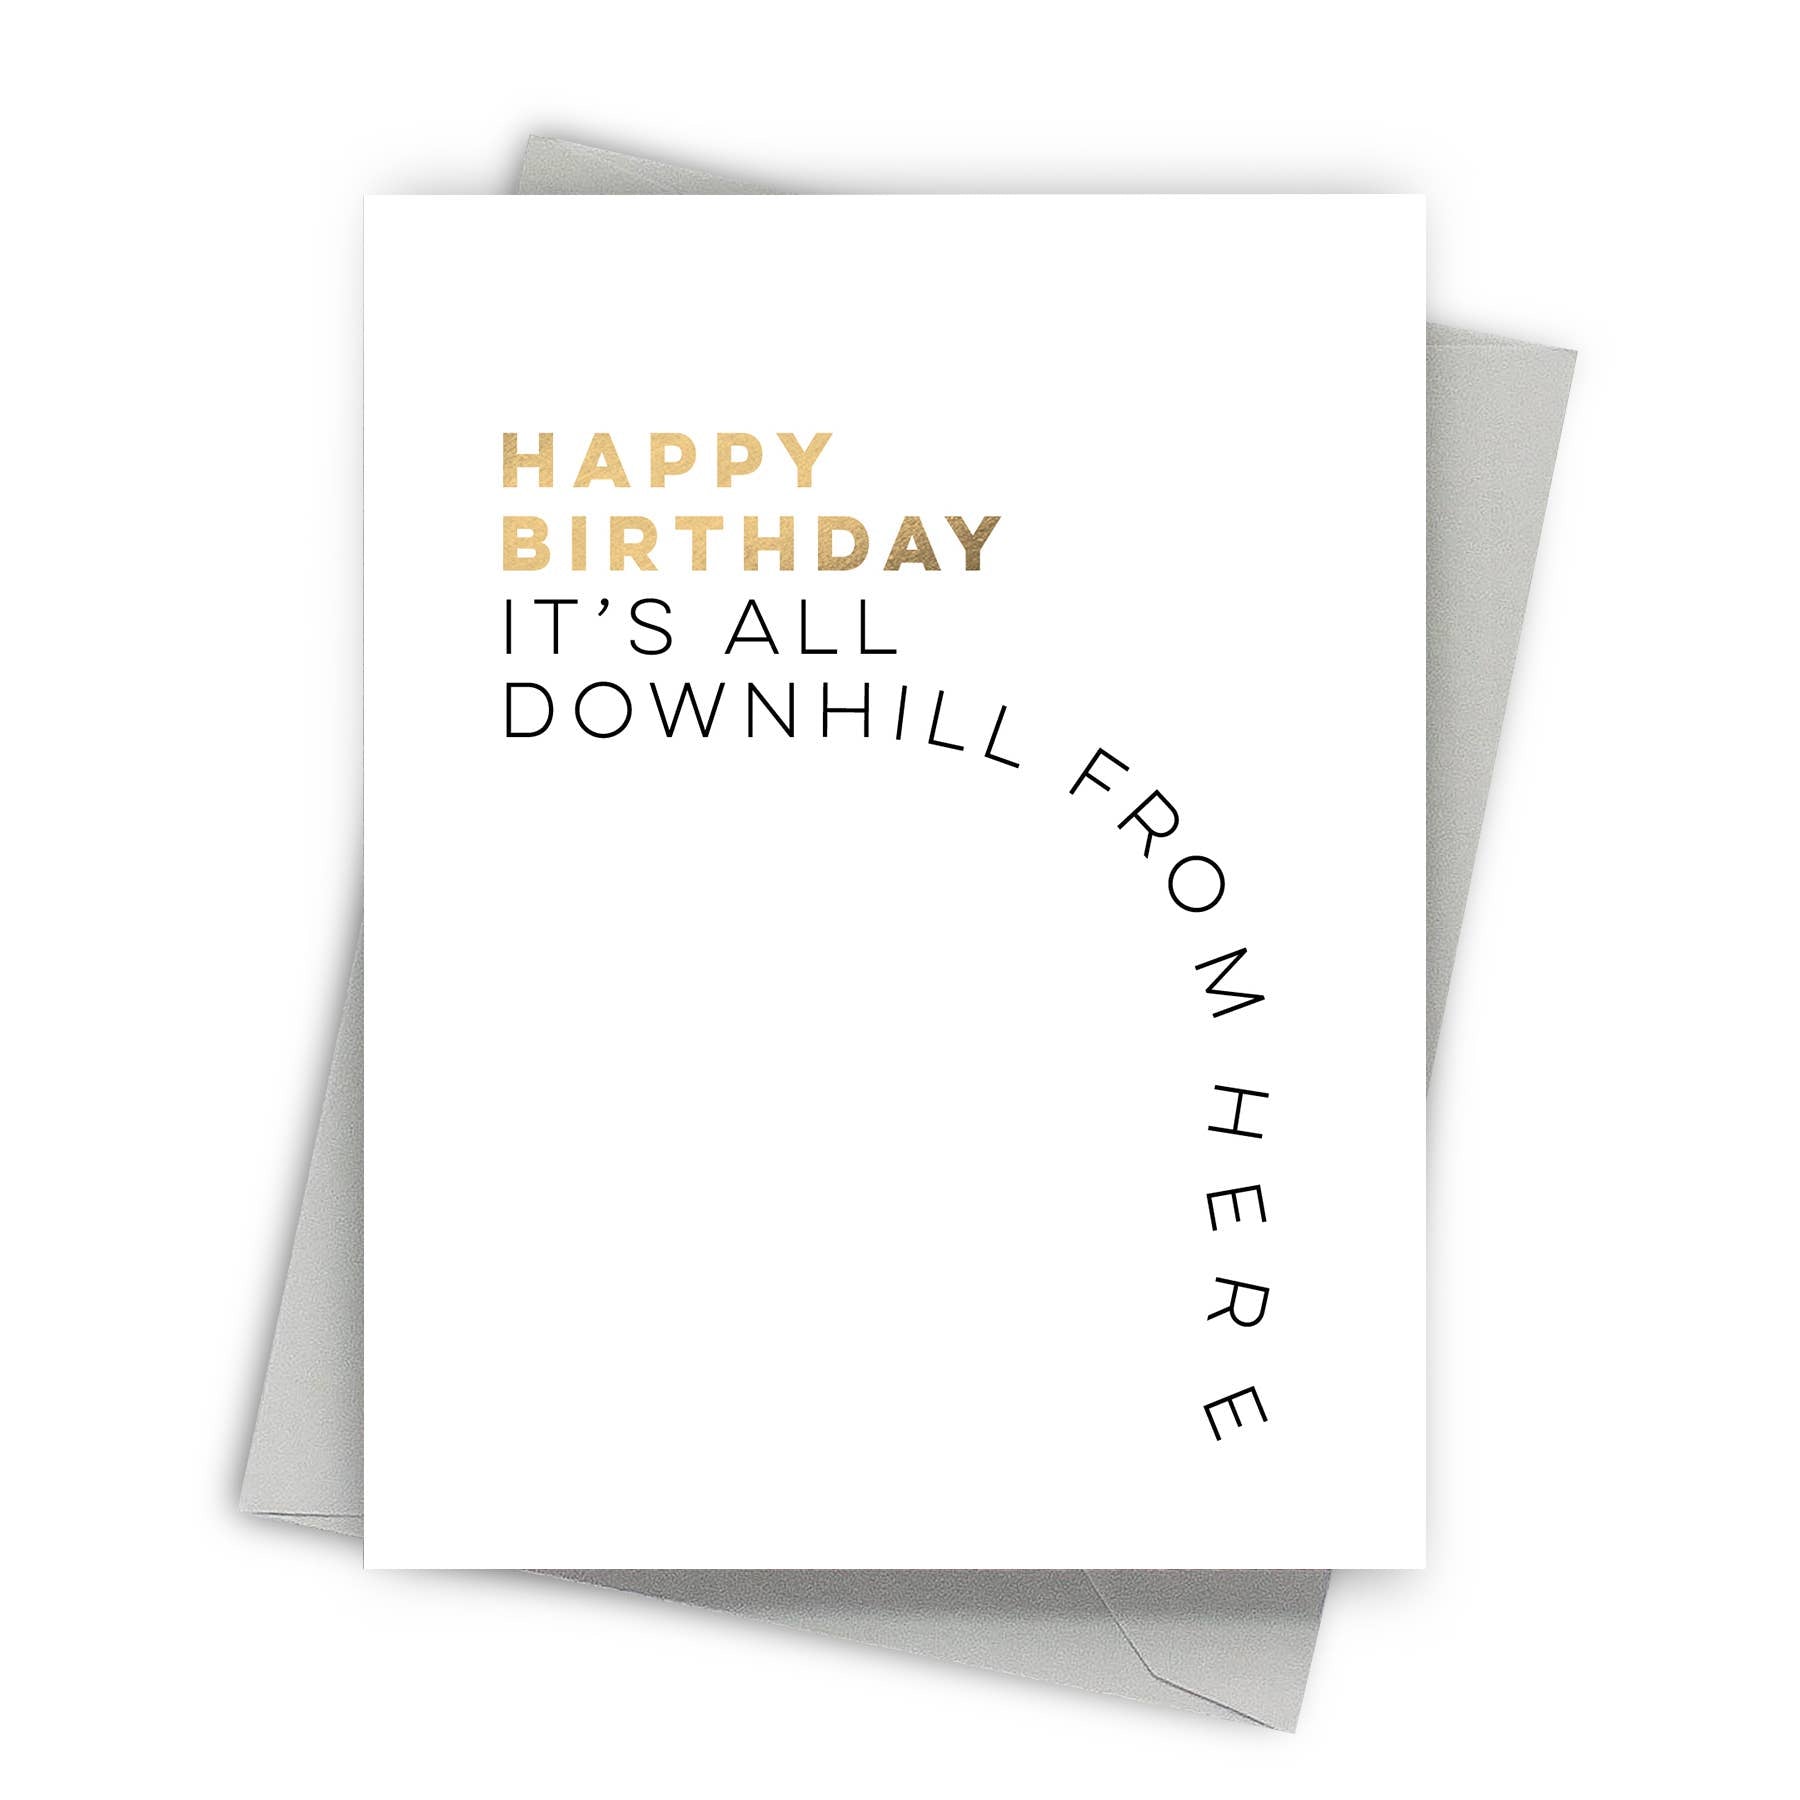 Downhill Birthday Card